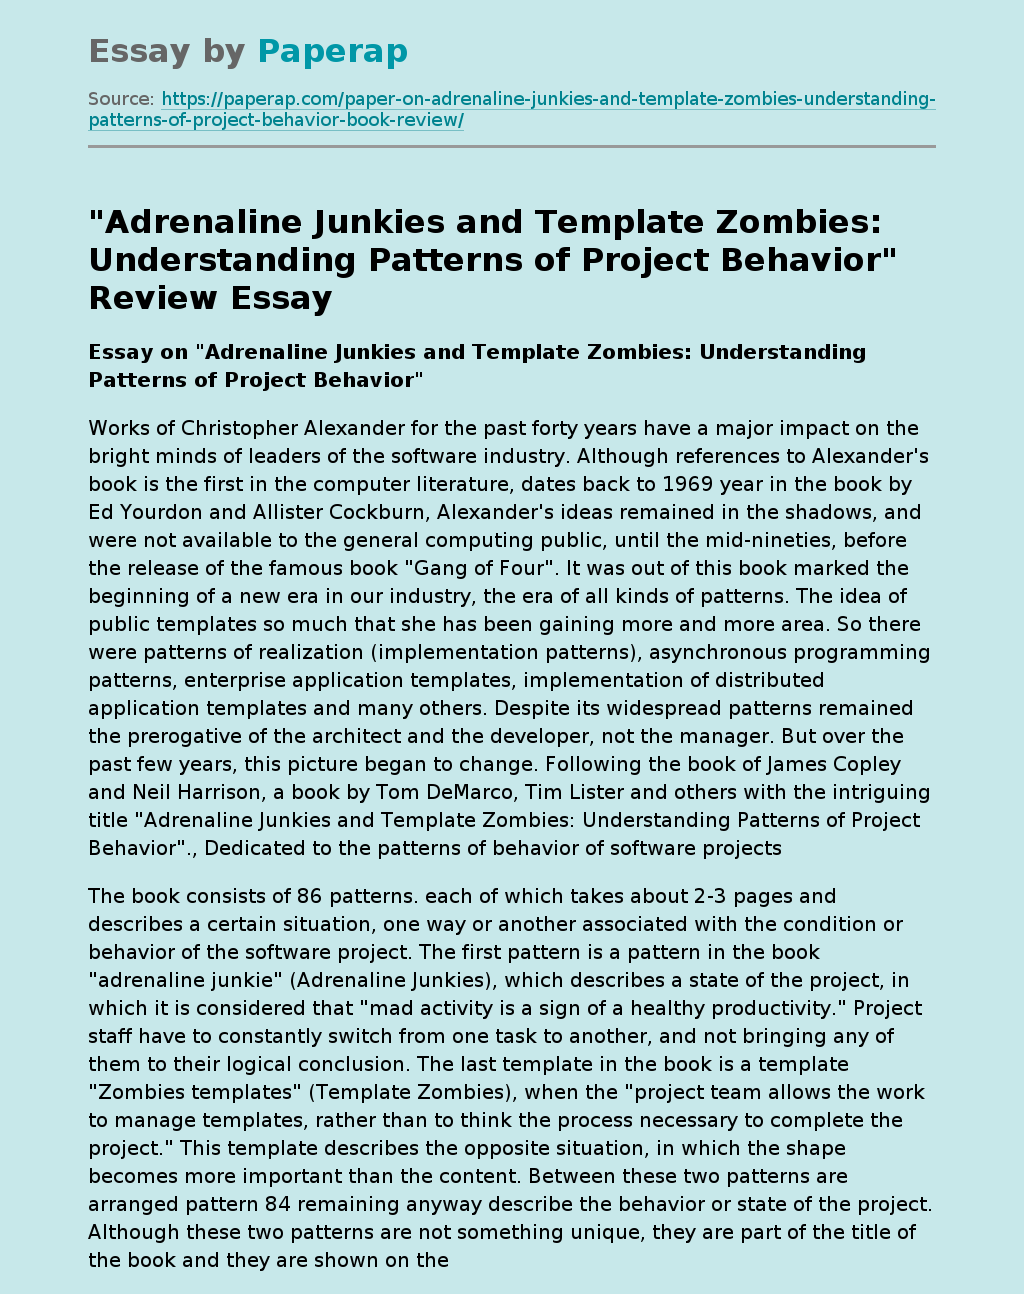 "Adrenaline Junkies and Template Zombies: Understanding Patterns of Project Behavior" Review